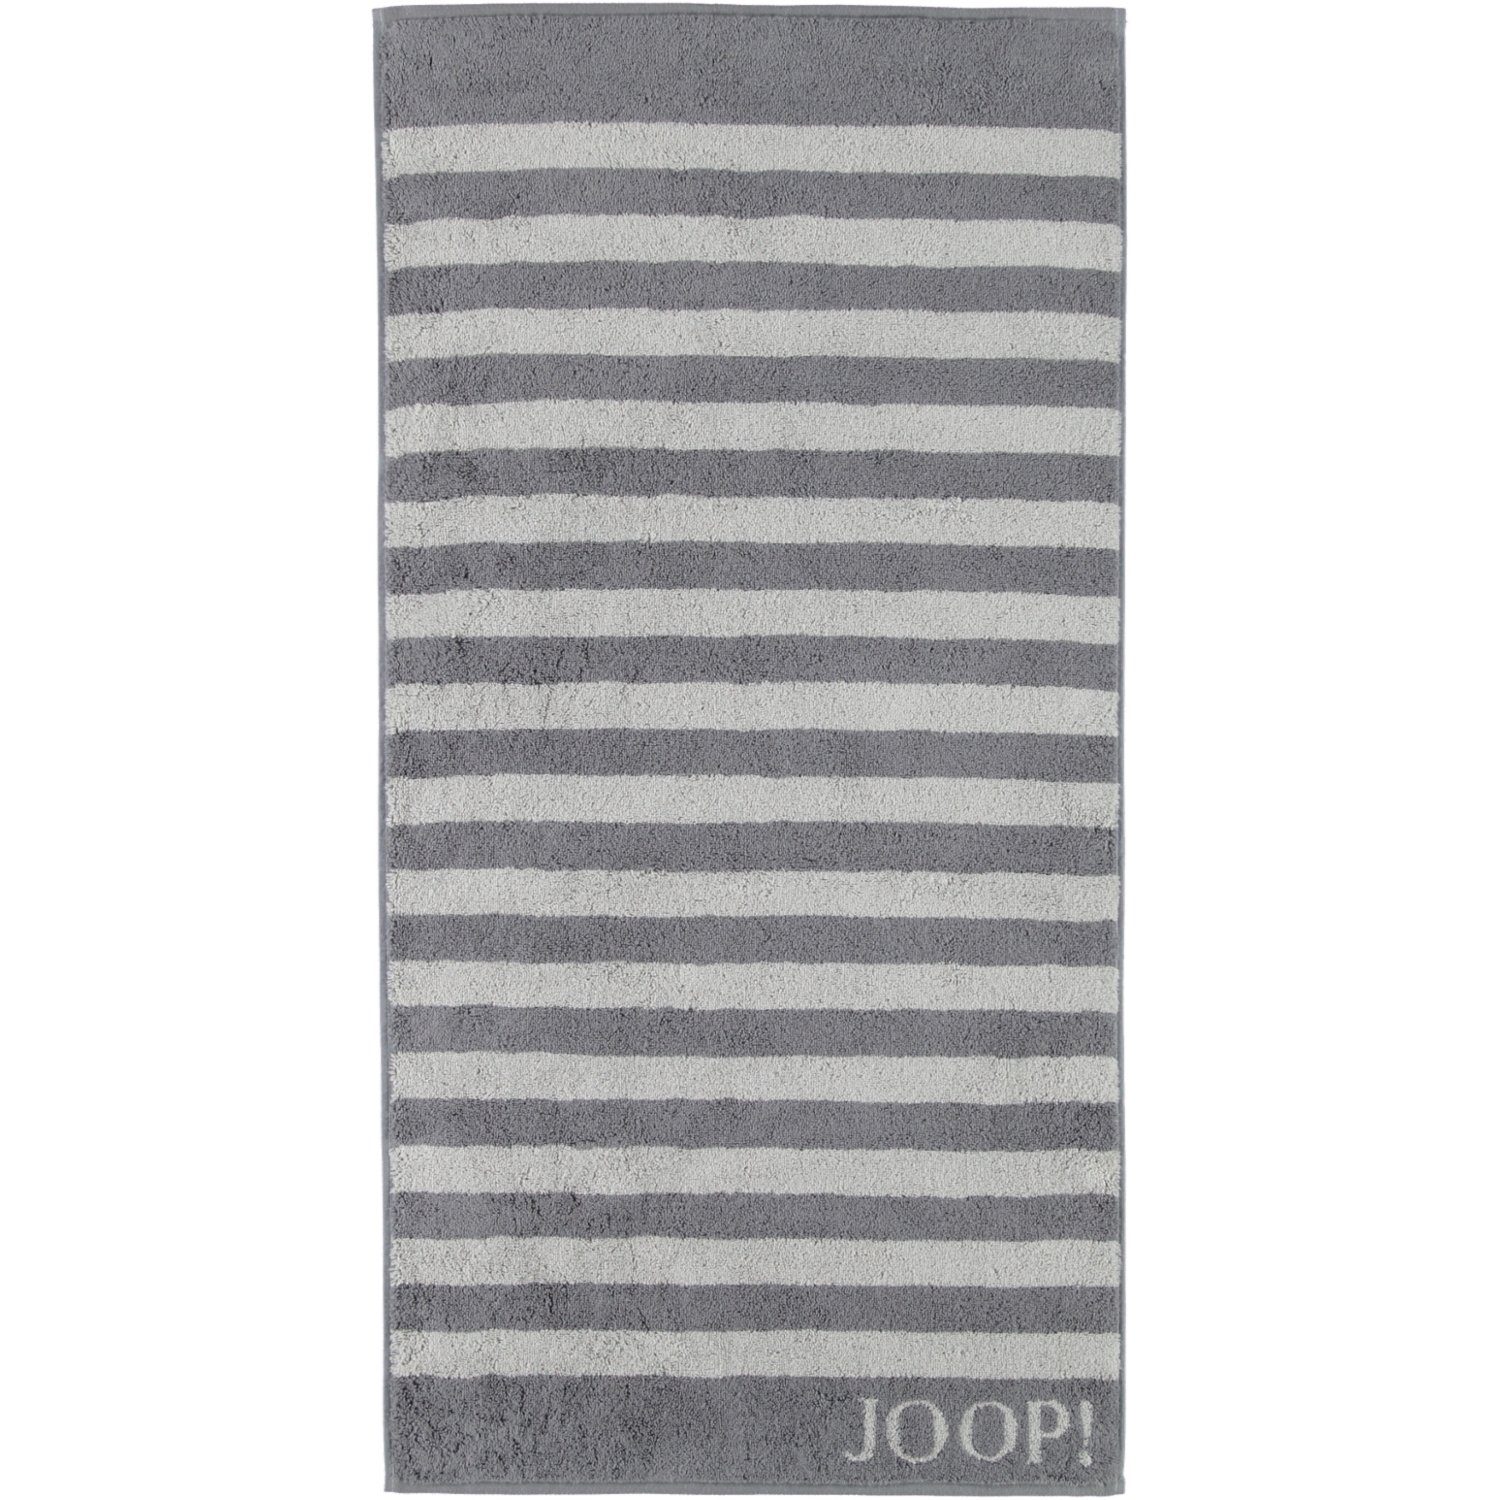 Joop! Baumwolle 100% Handtücher 1610, Classic Stripes anthrazit